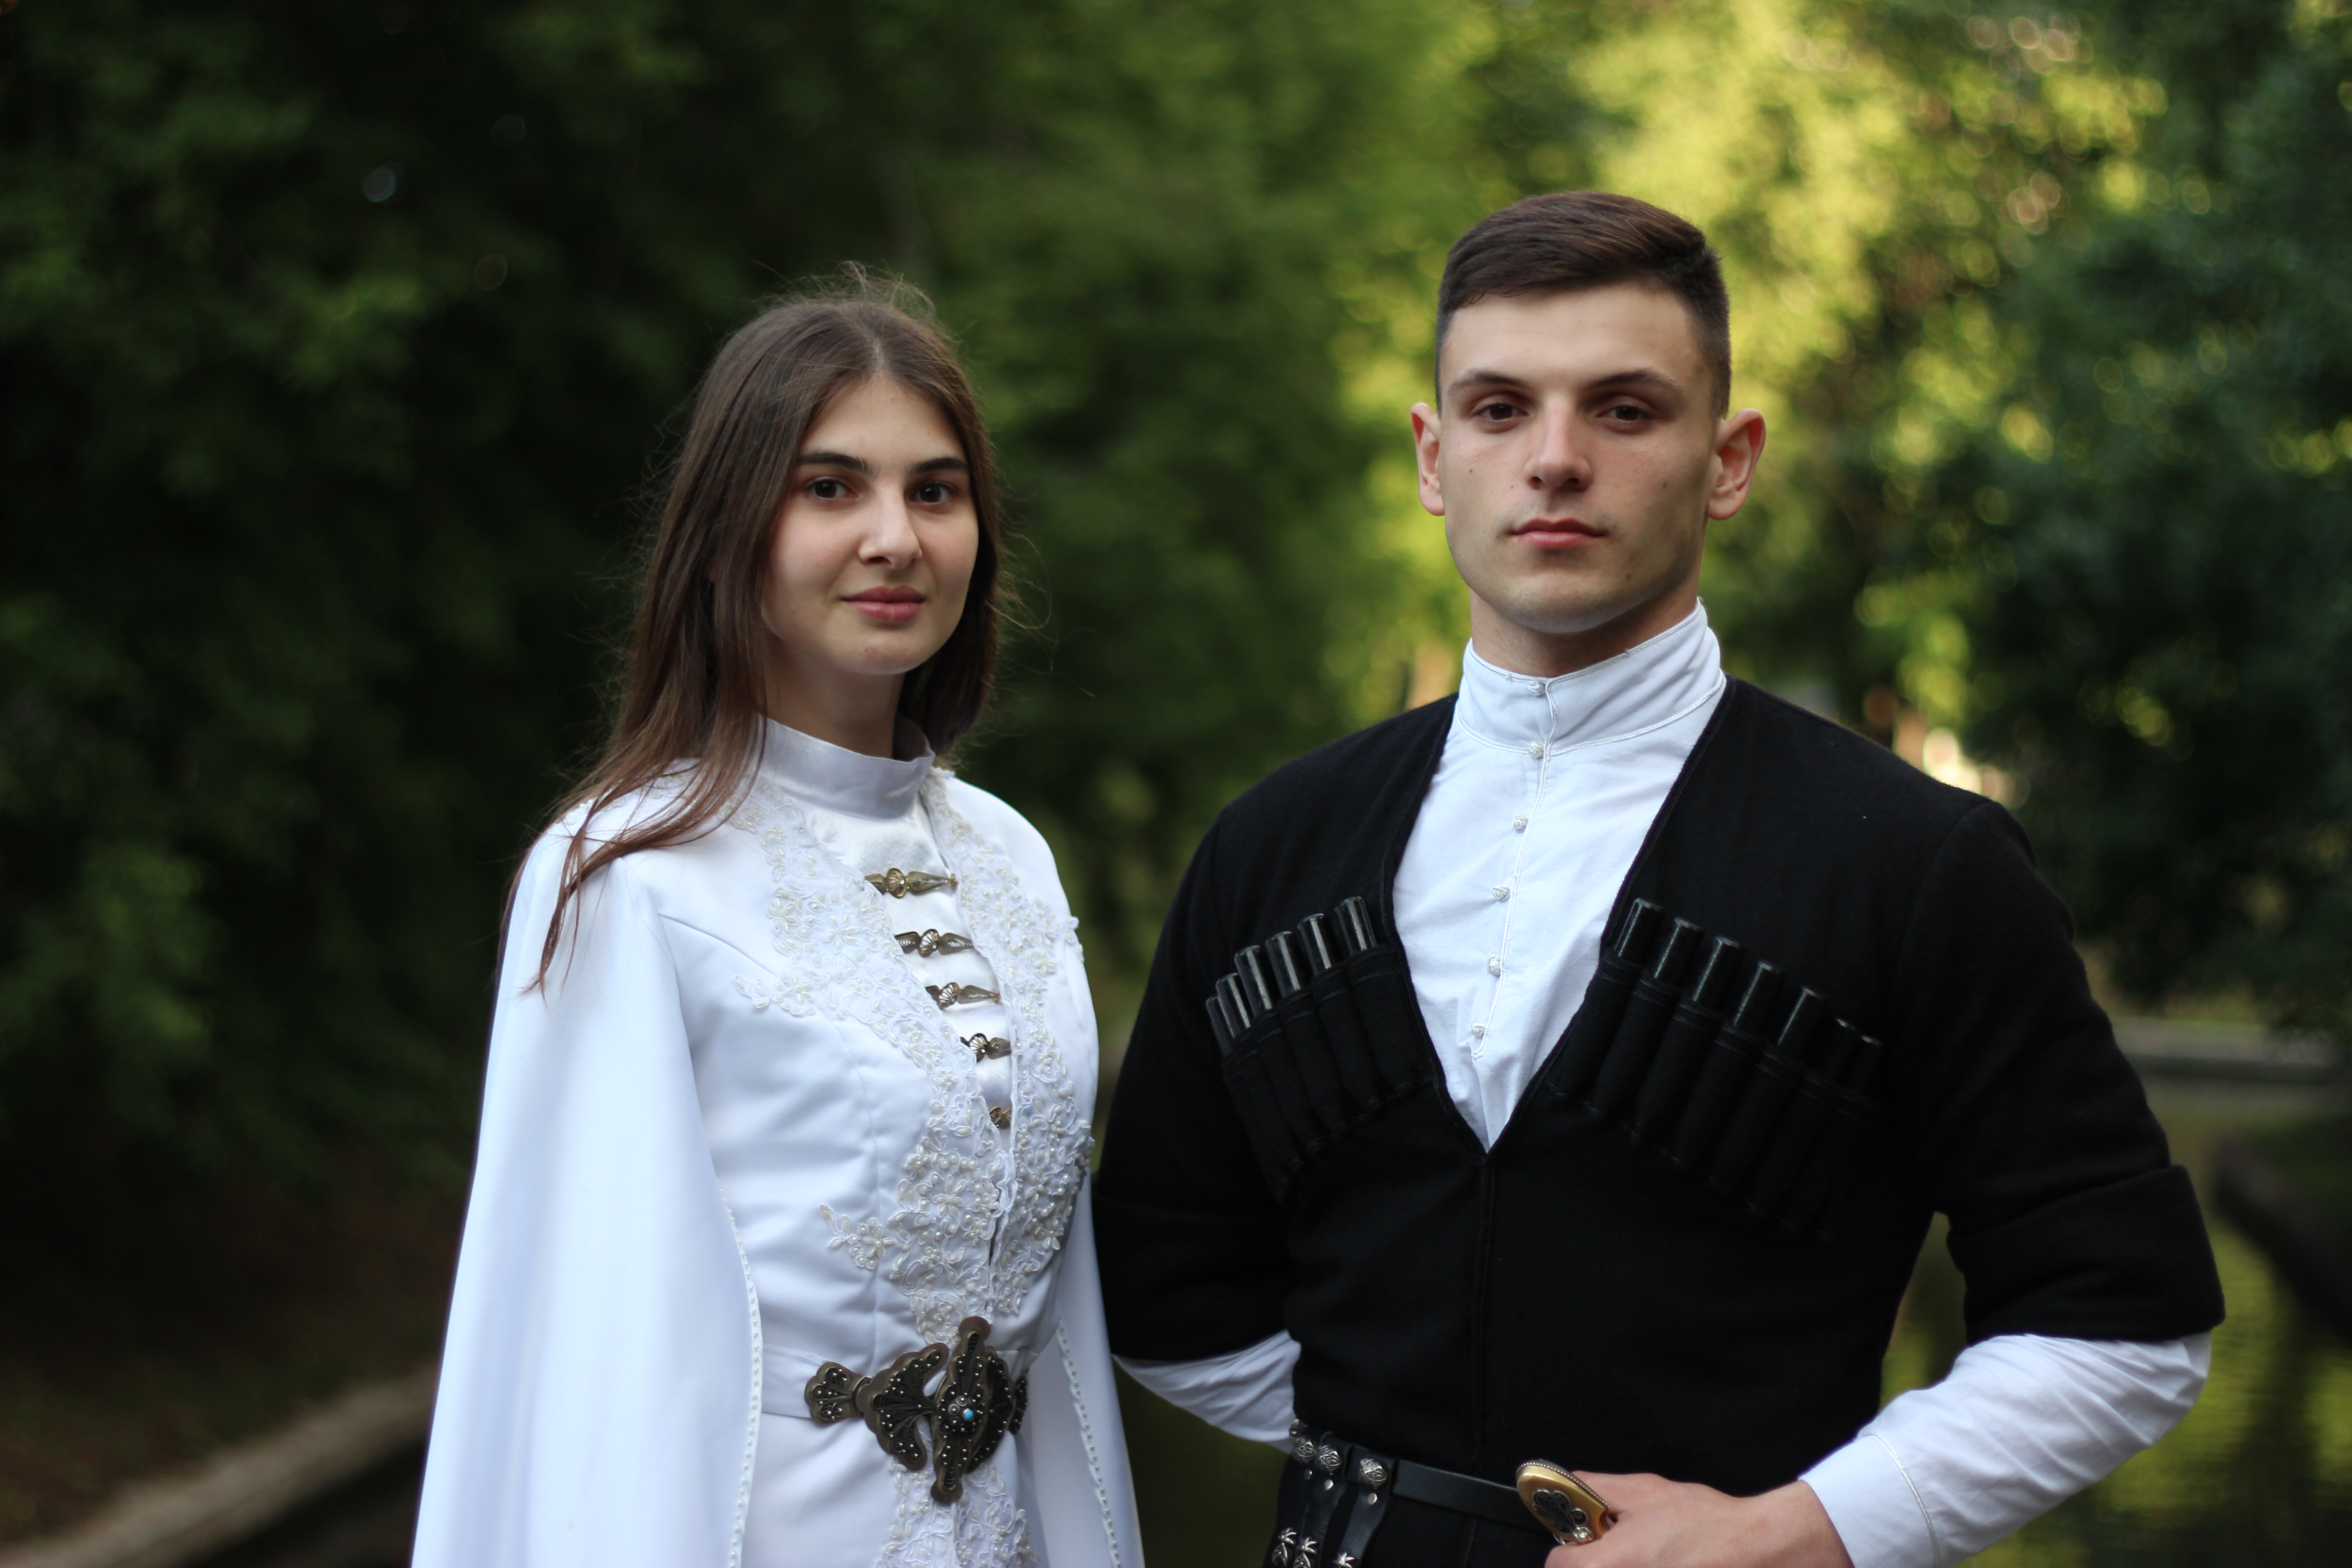 Бока национальность. Абхазы в Абхазии. Абхазцы мужчины. Абхазская свадьба. Абхазский национальный костюм.